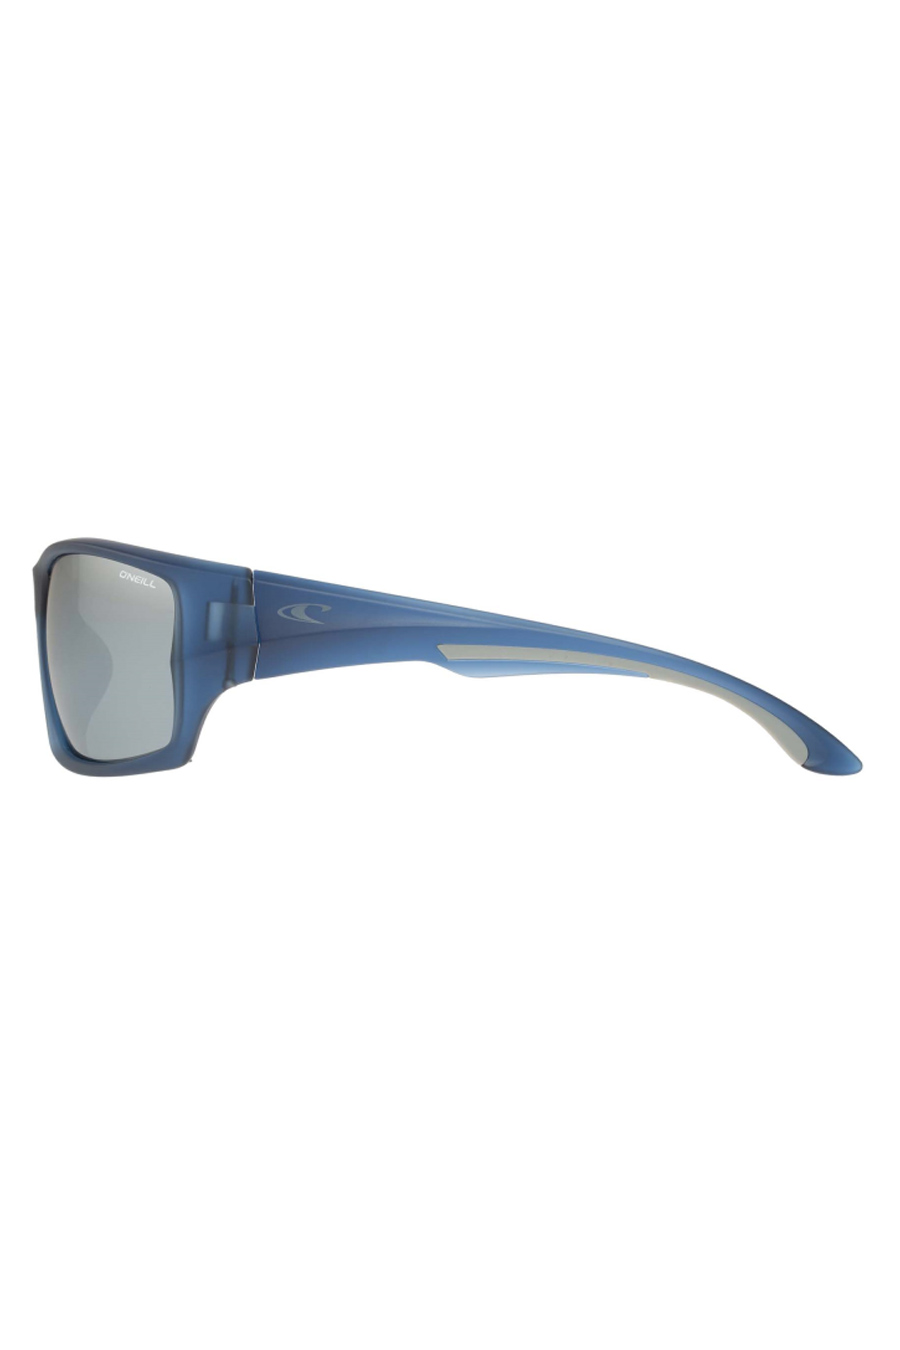 Sunglasses ONEILL ONS-9020-20-106P